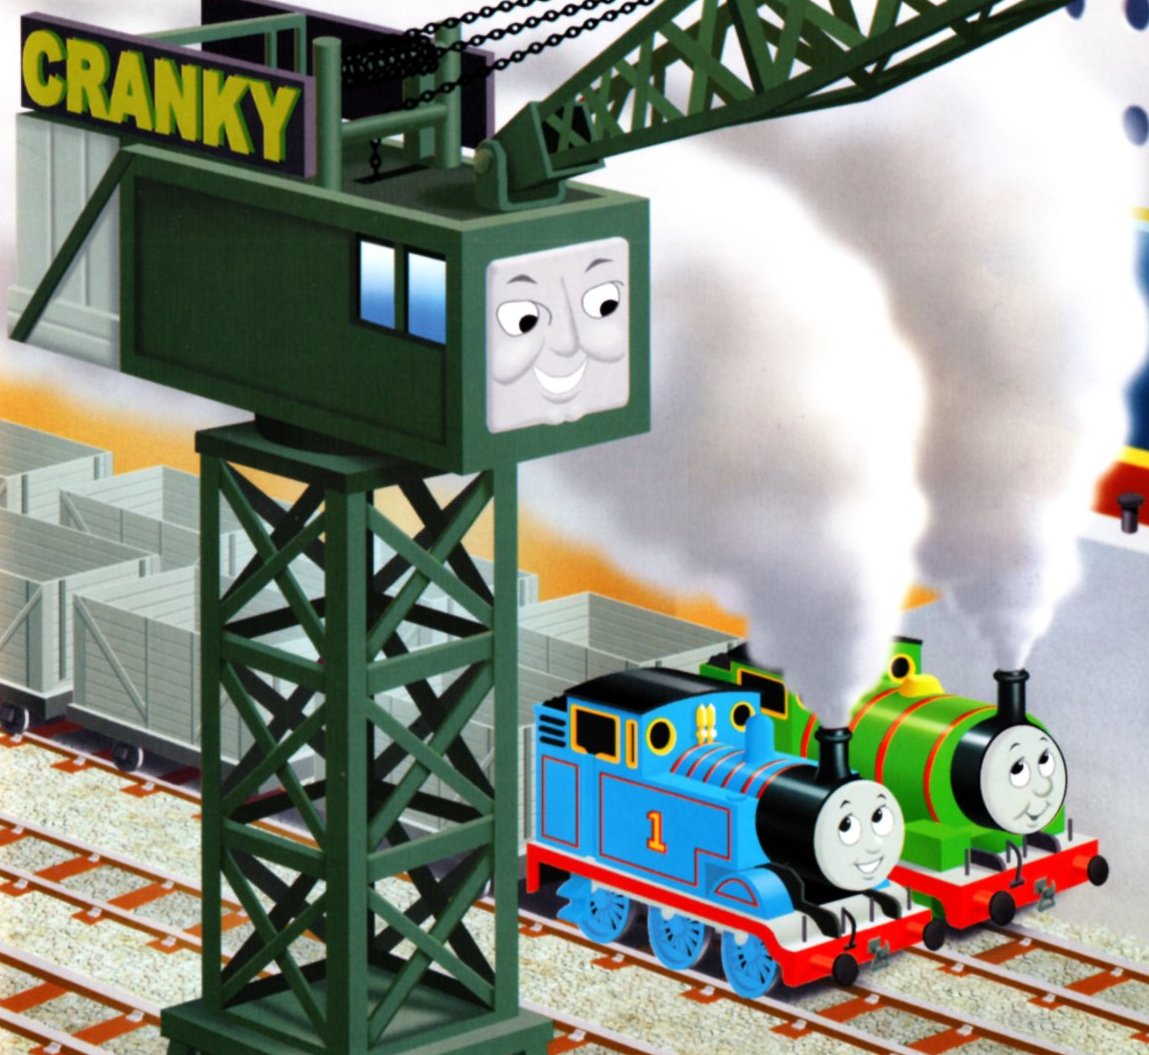 Thomas cranky